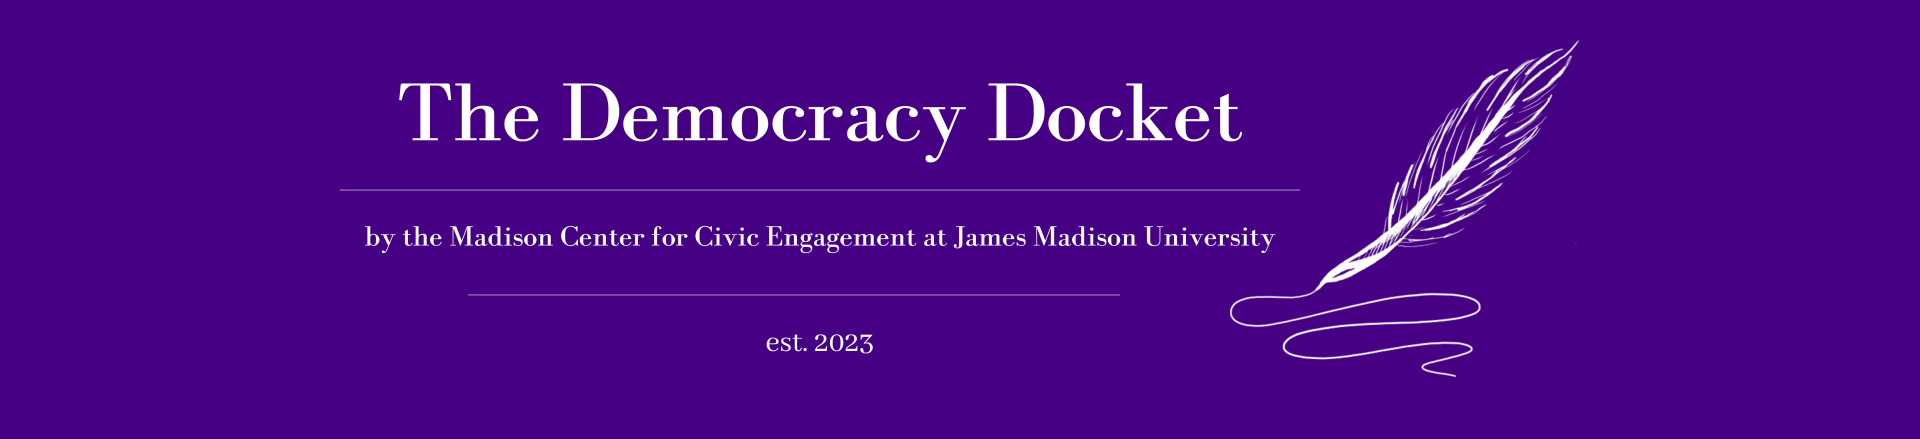 The Democracy Docket